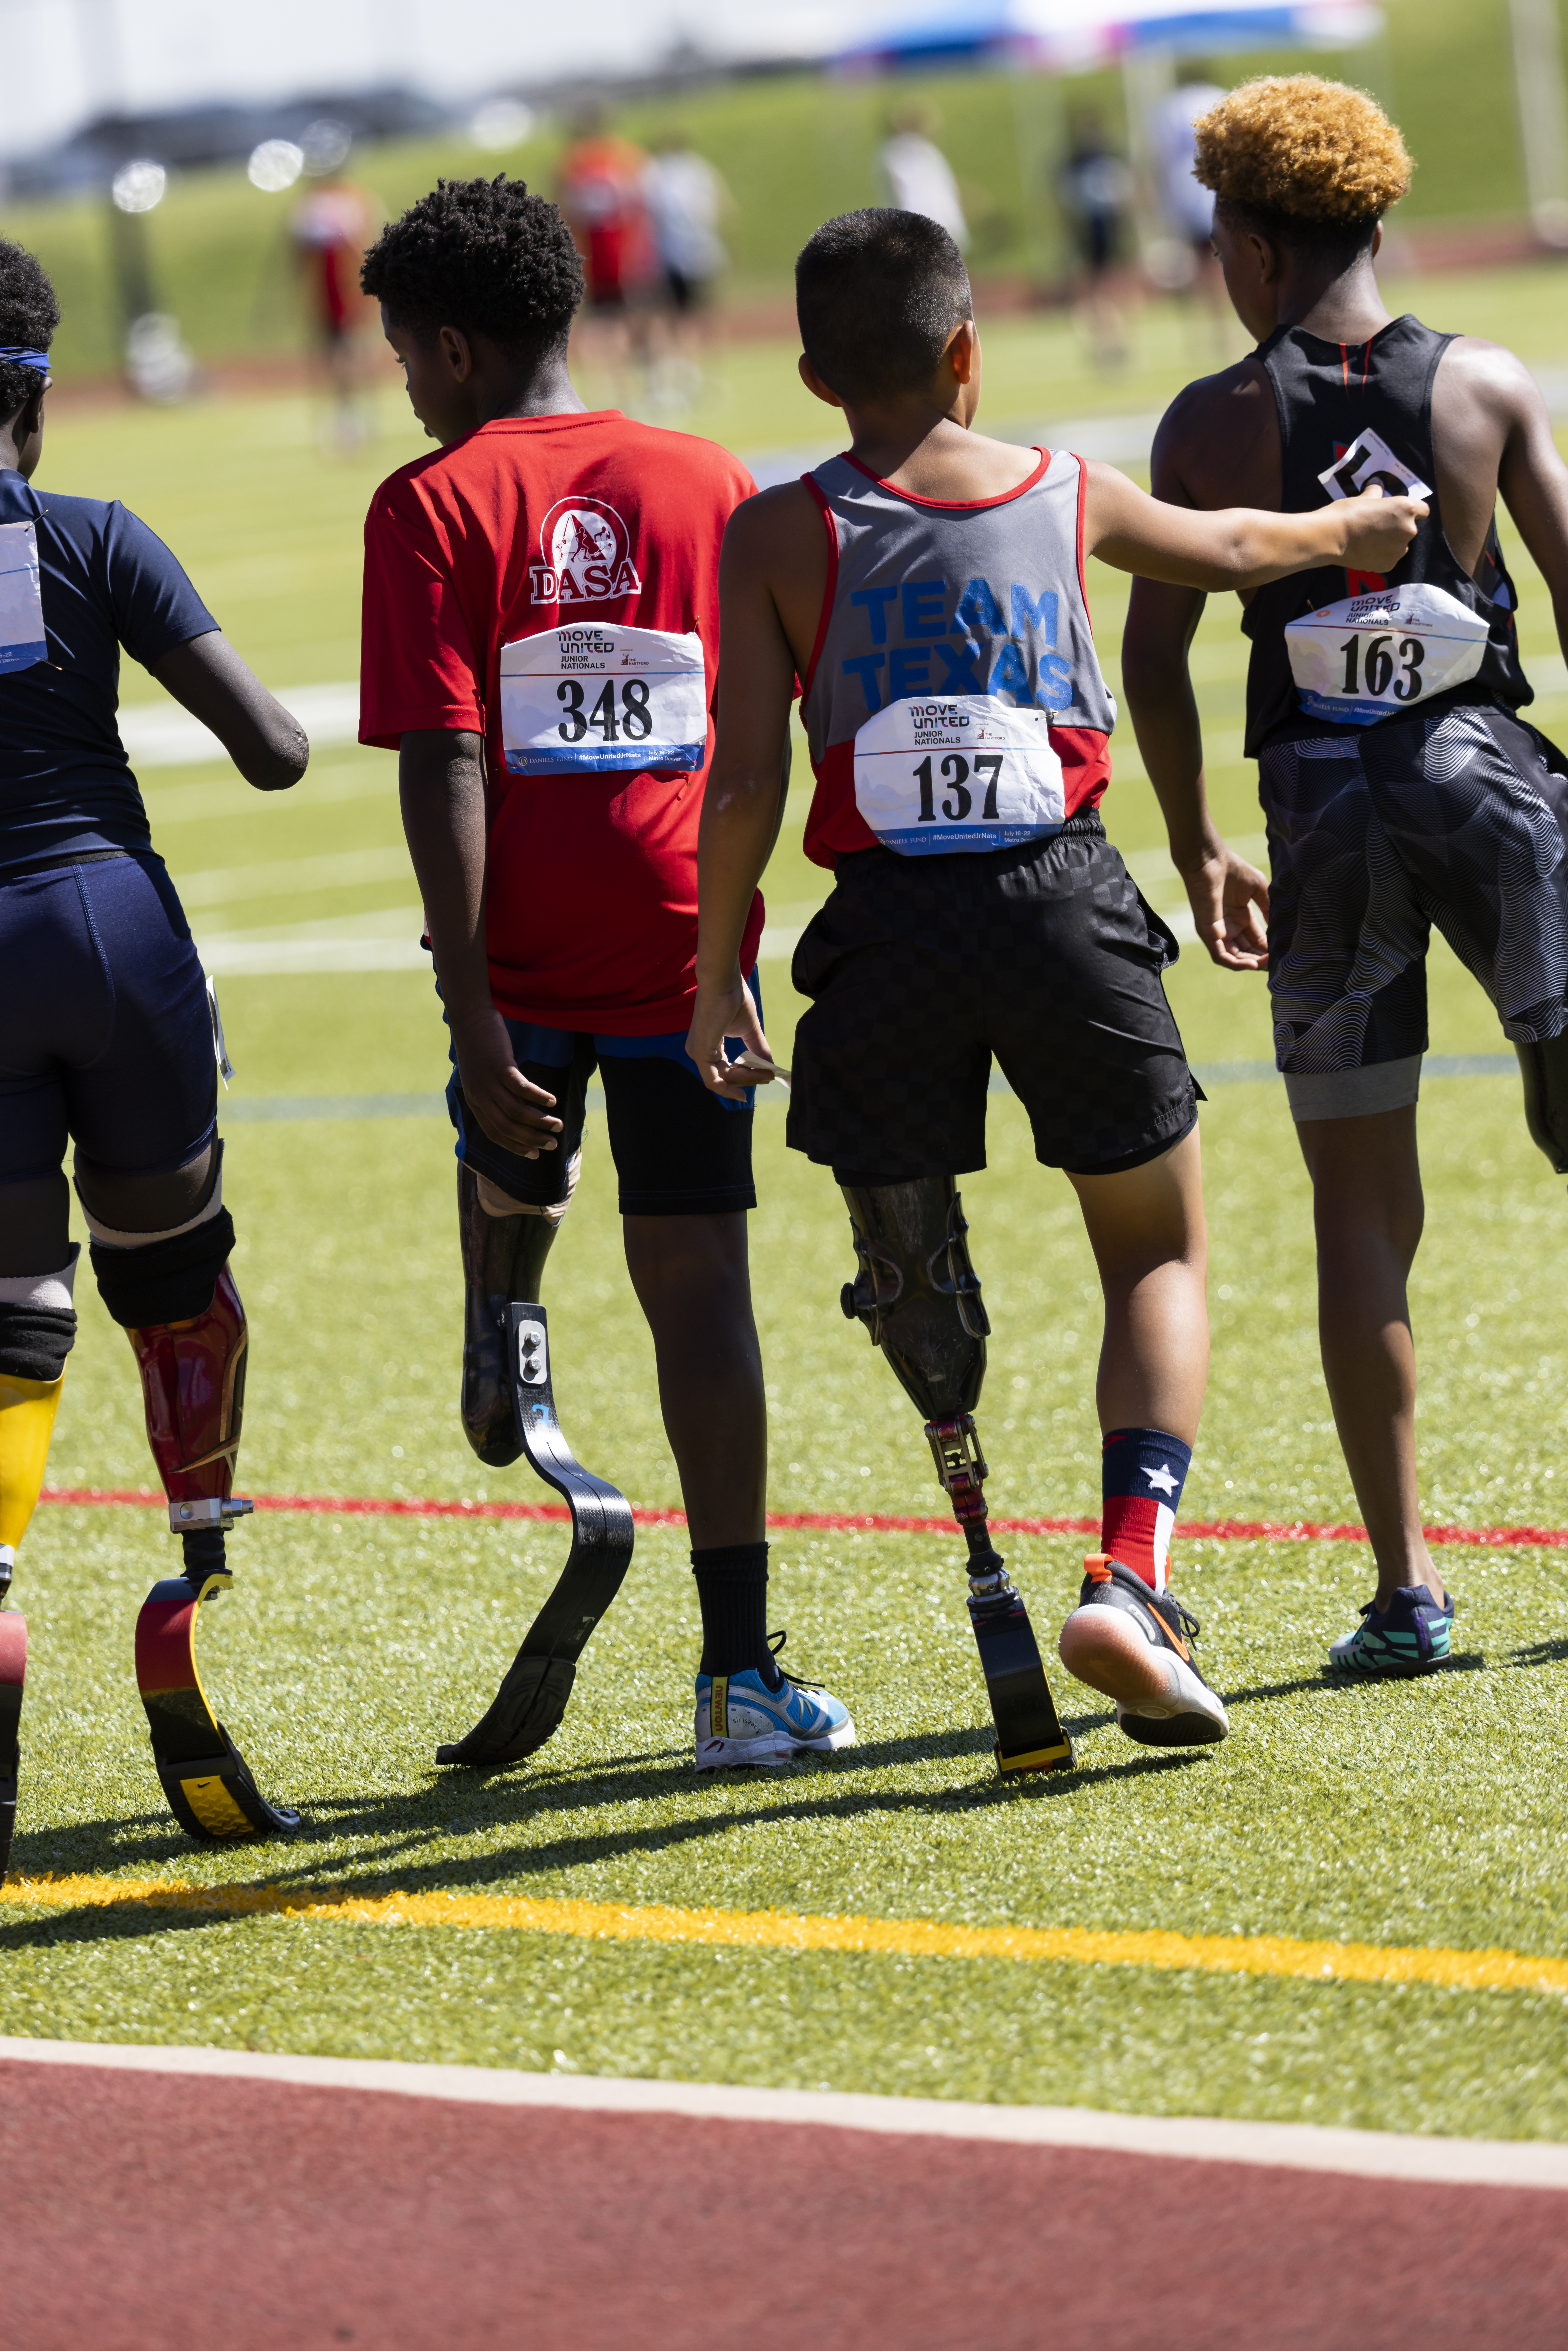 4 adaptive athletes walking away from the camera.